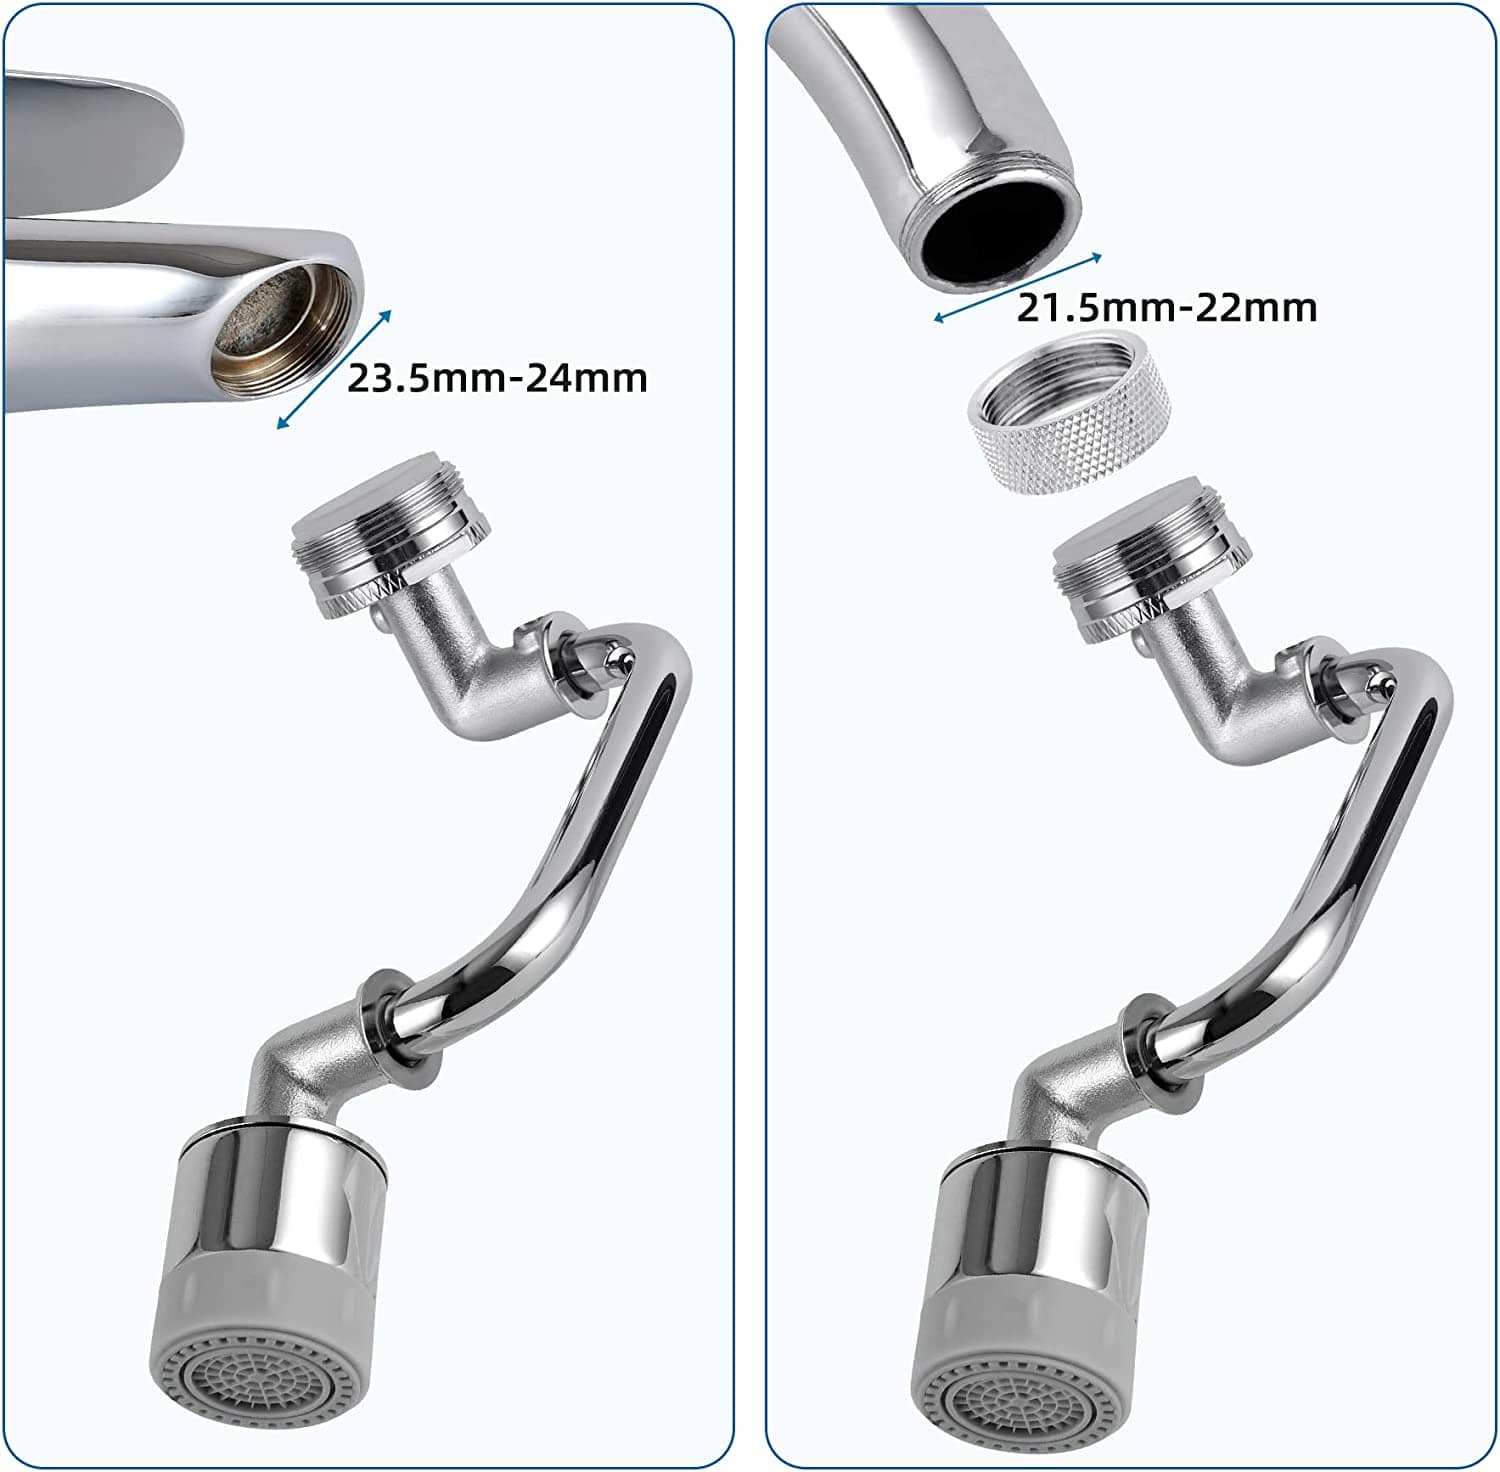 Hibbent Faucet Aerator Pre-Sale Hibbent 1080 Degree Big Angle Swivel Faucet Aerator Dual Function 2-Flow Kitchen Sink Tap Aerator - Chrome